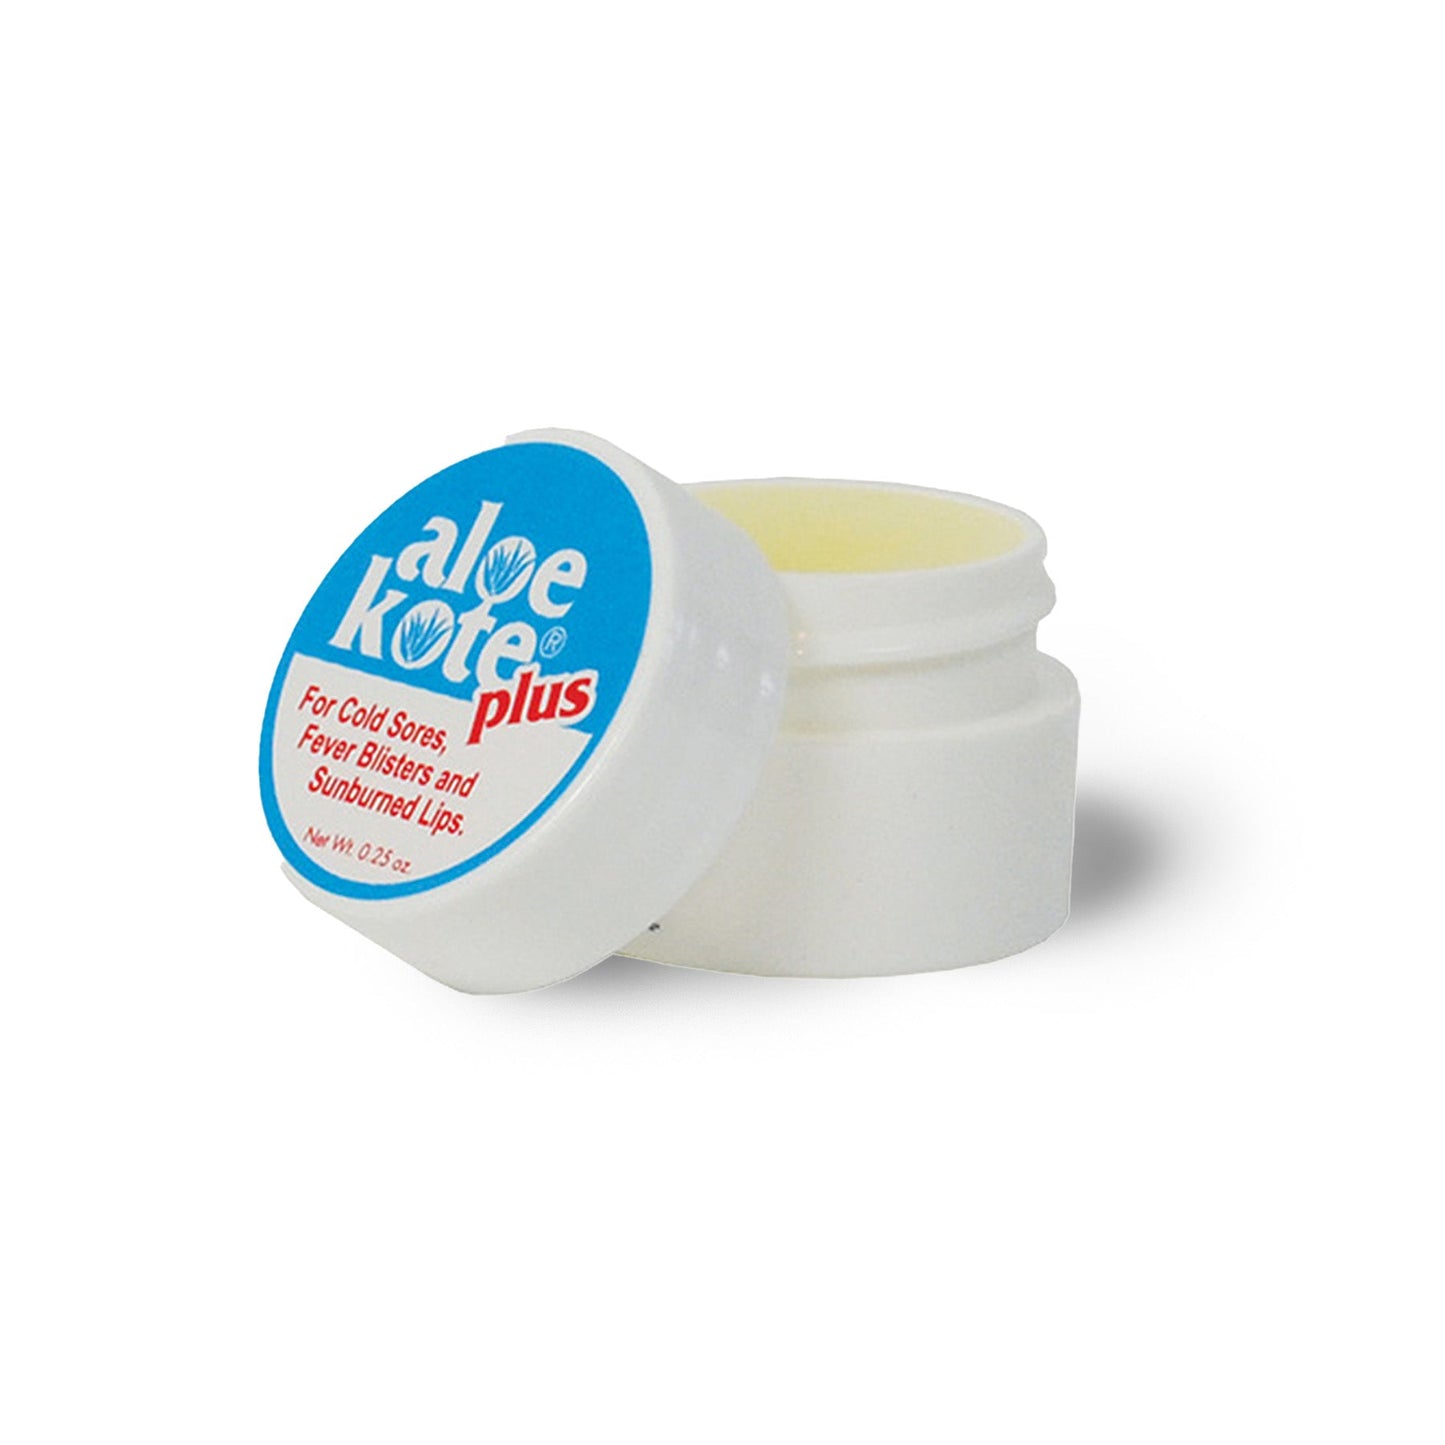 Aloe Kote Plus Lip-Balm Soother Pocket-Sized 7g Tub